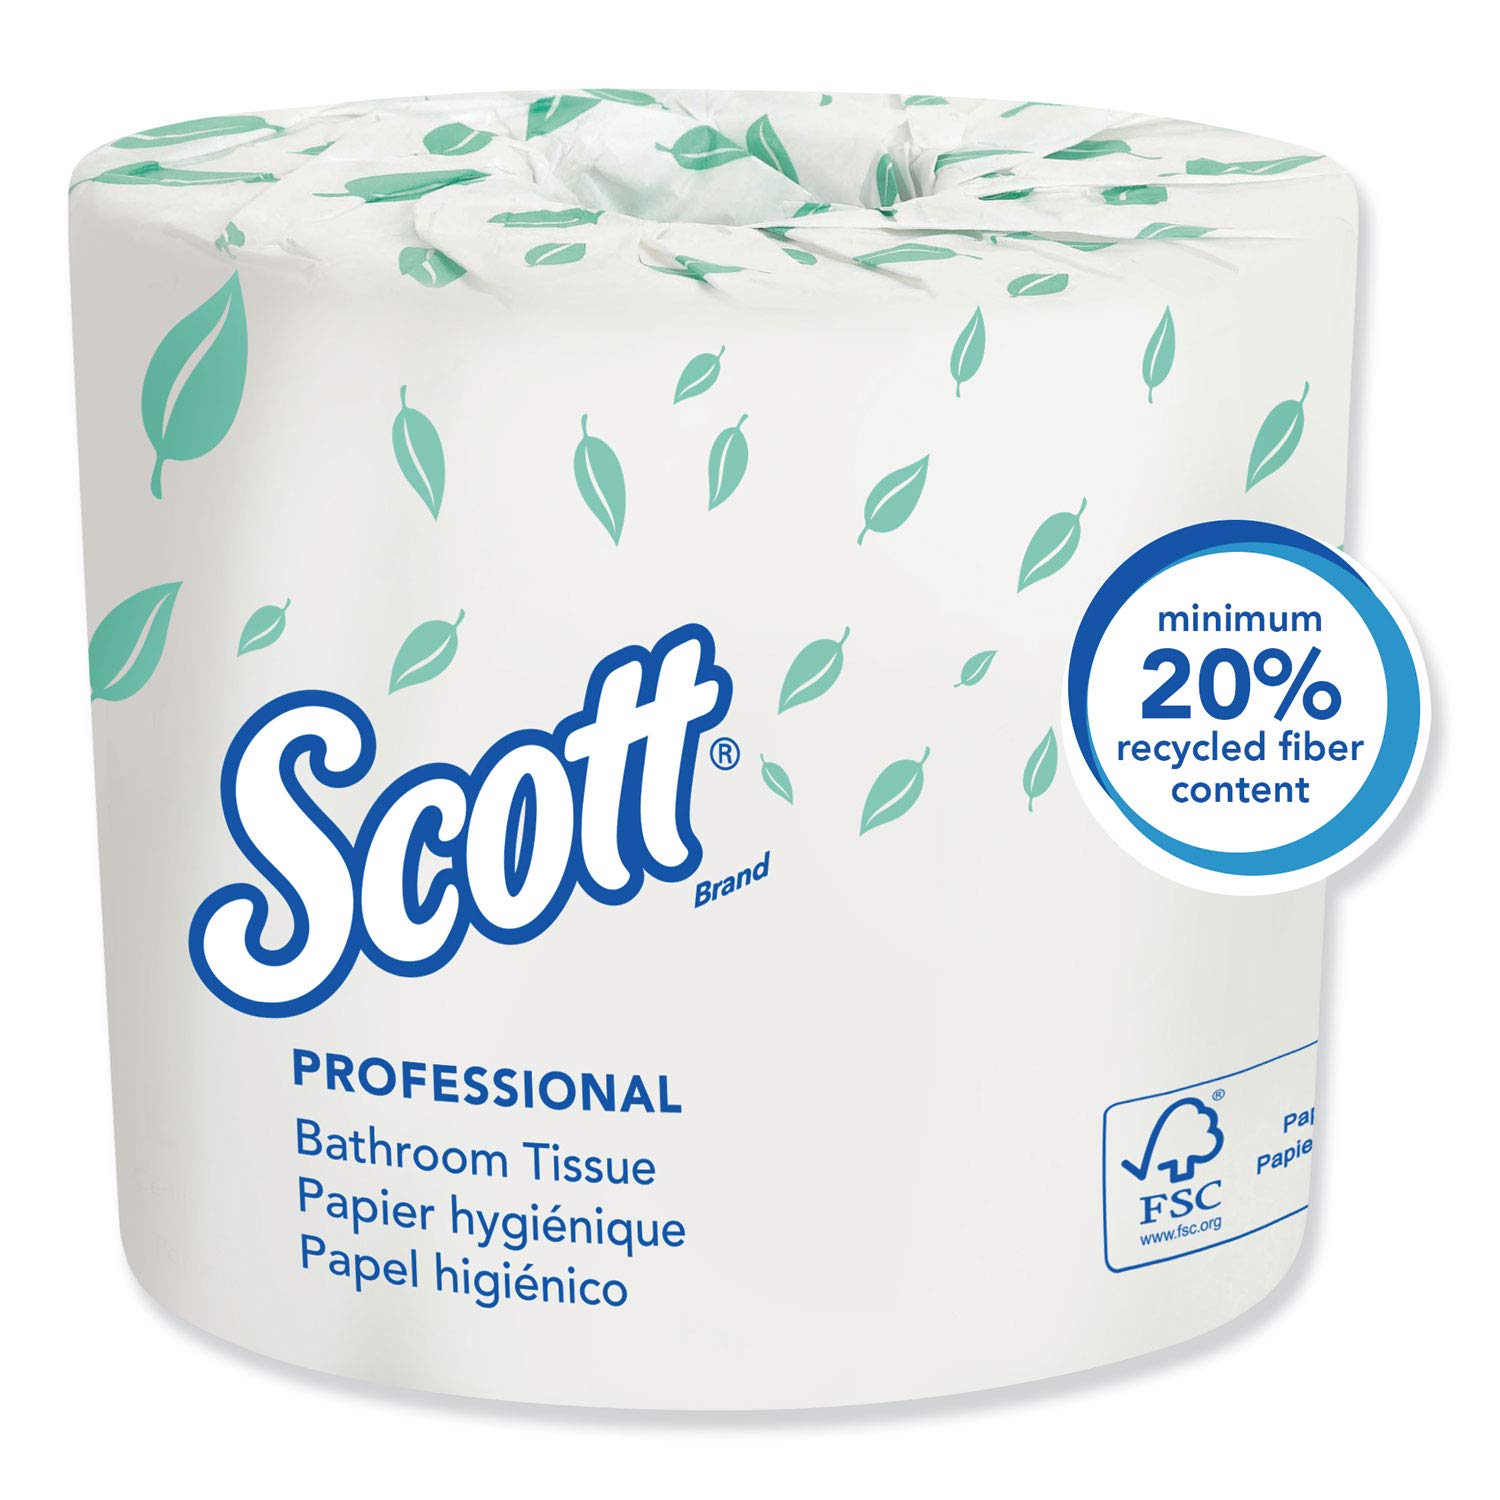 Scott Essential Professional Bulk Toilet Paper, 20 Rolls